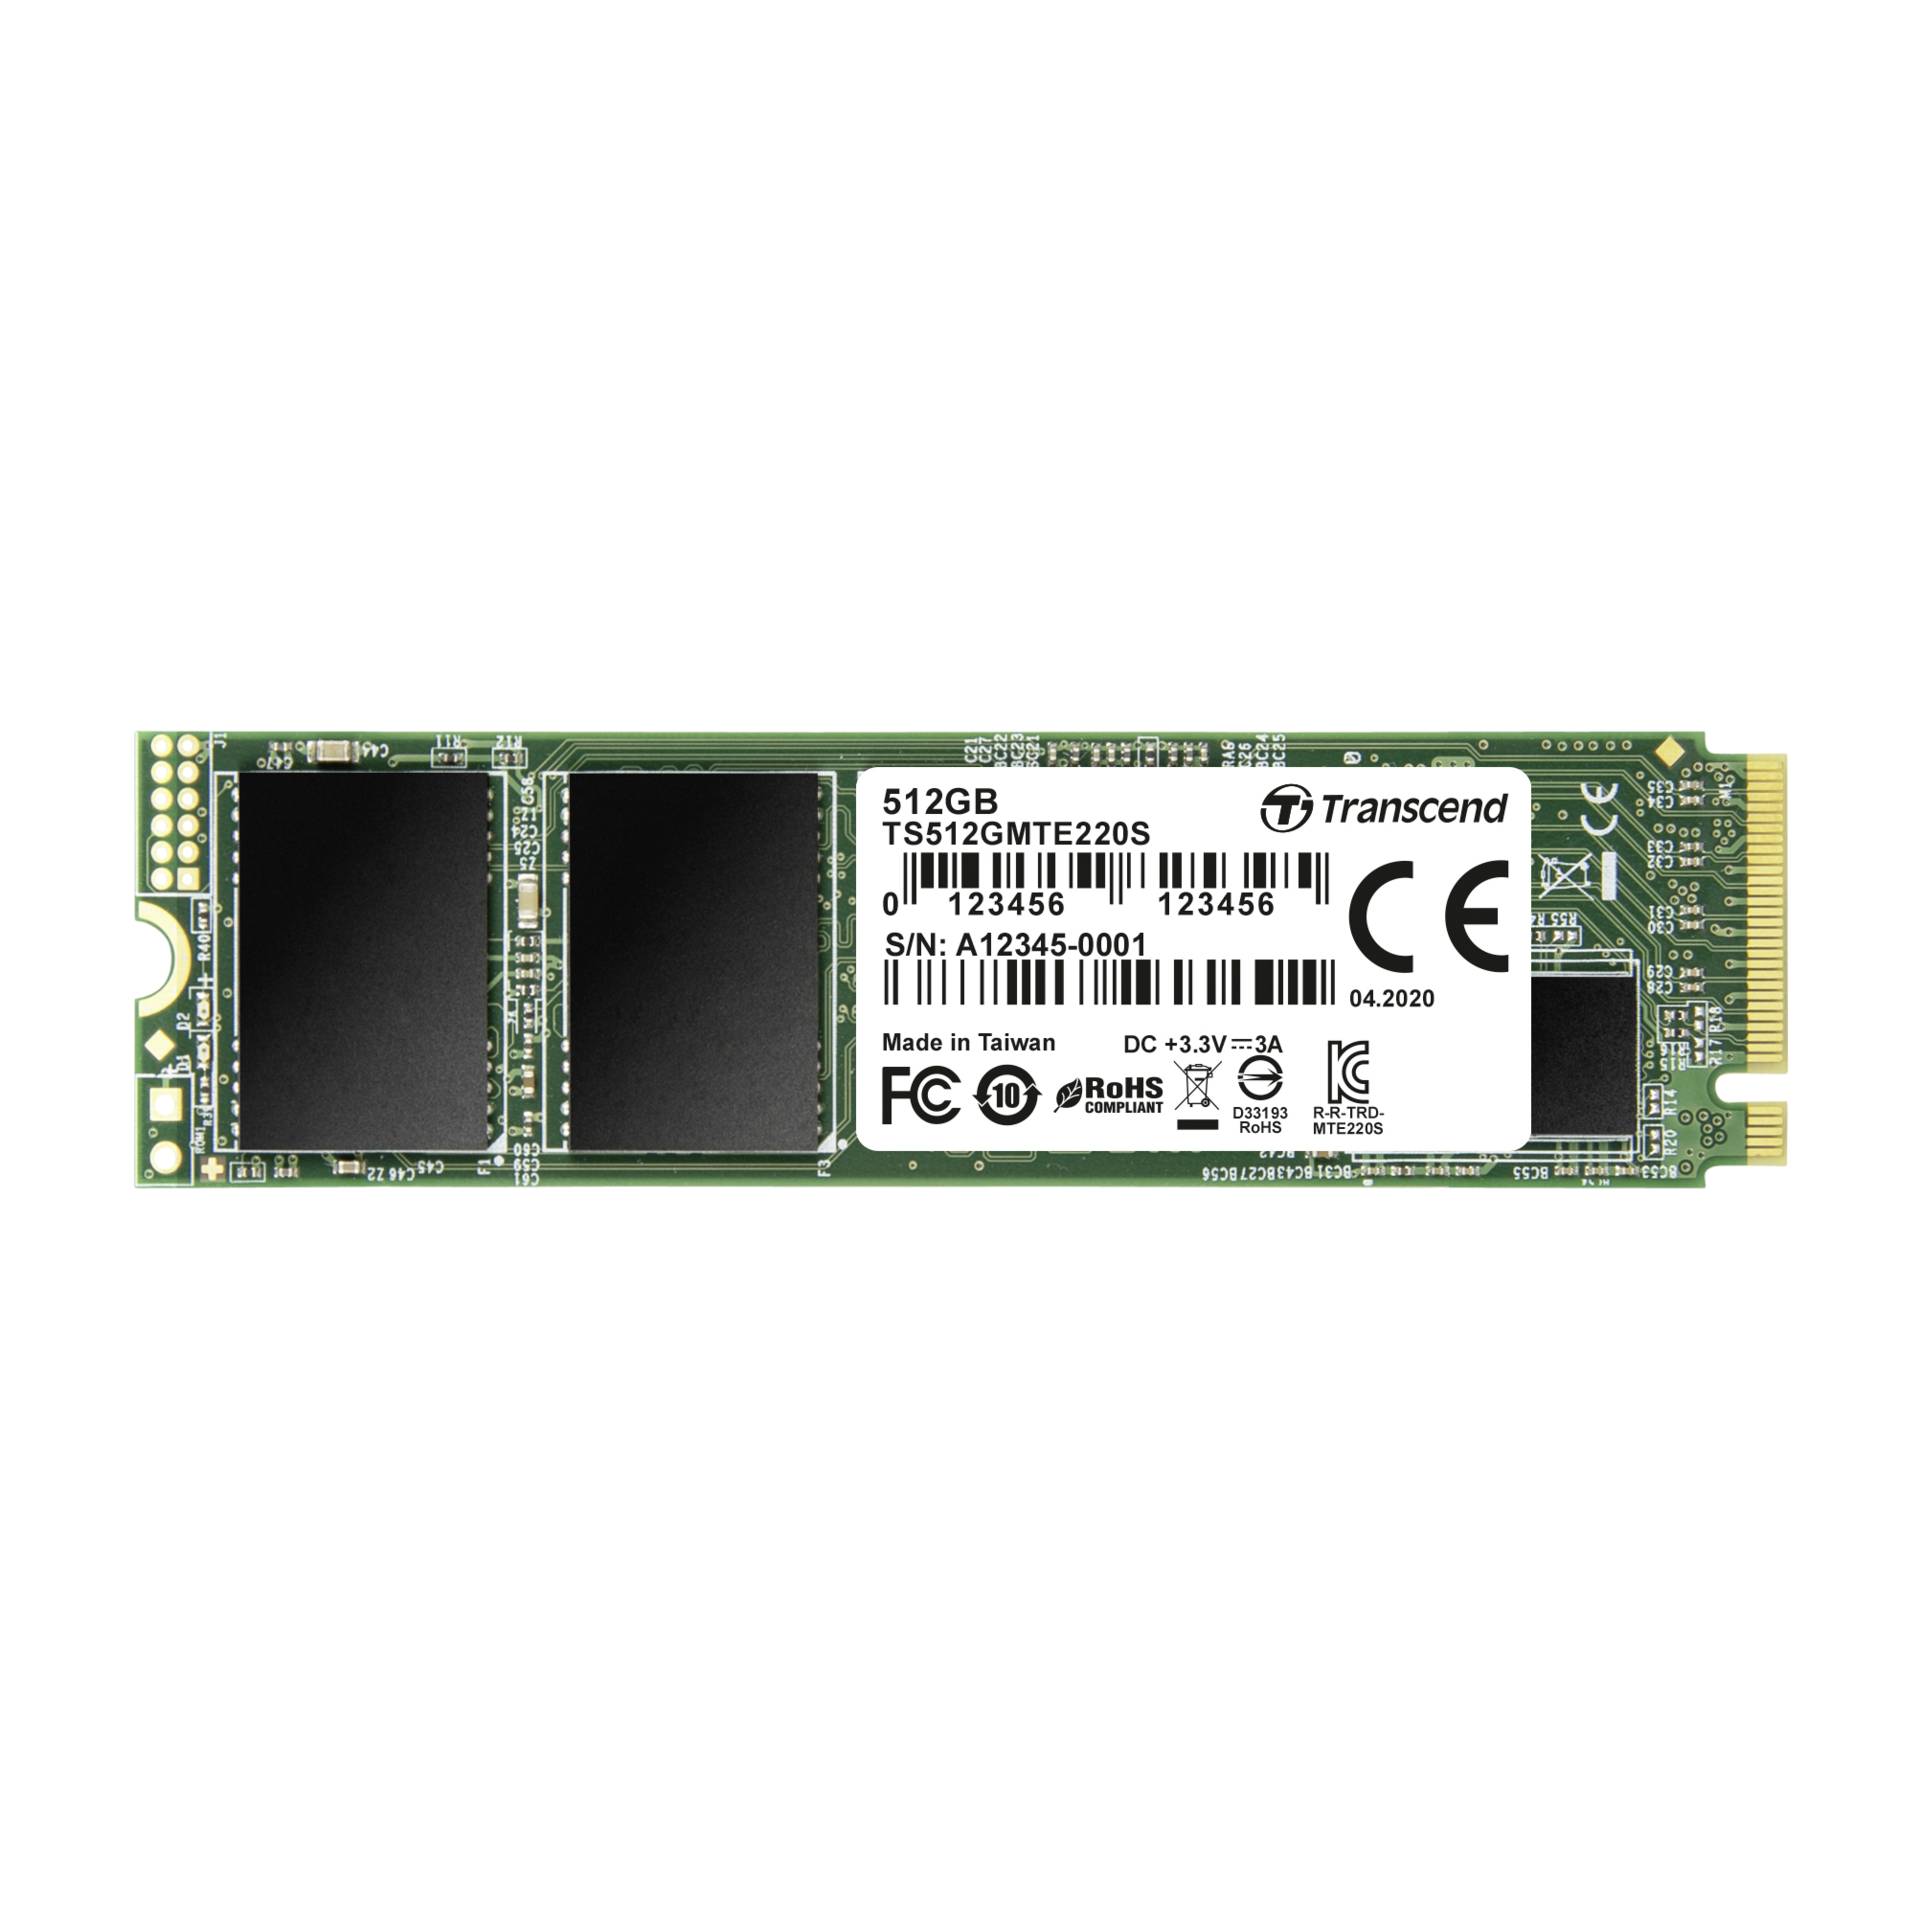 512 GB SSD Transcend PCIe SSD 220S, 80mm M.2 NVMe PCIe 3.0 lesen: 570MB/s, schreiben: 470MB/s, TBW: 1.18PB